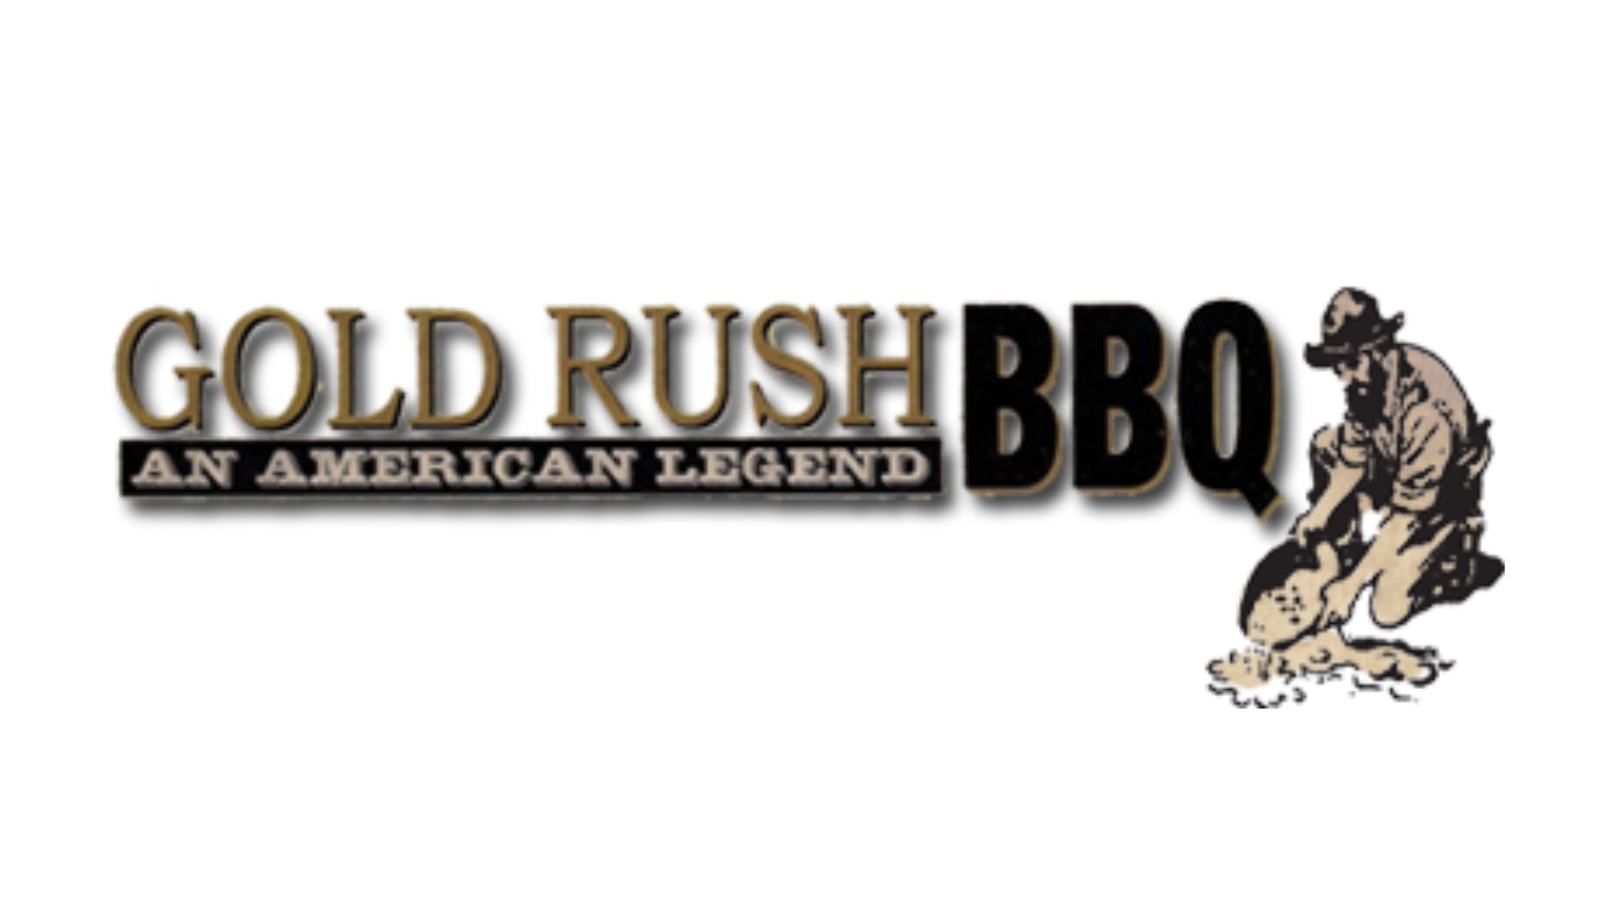 Gold Rush BBQ